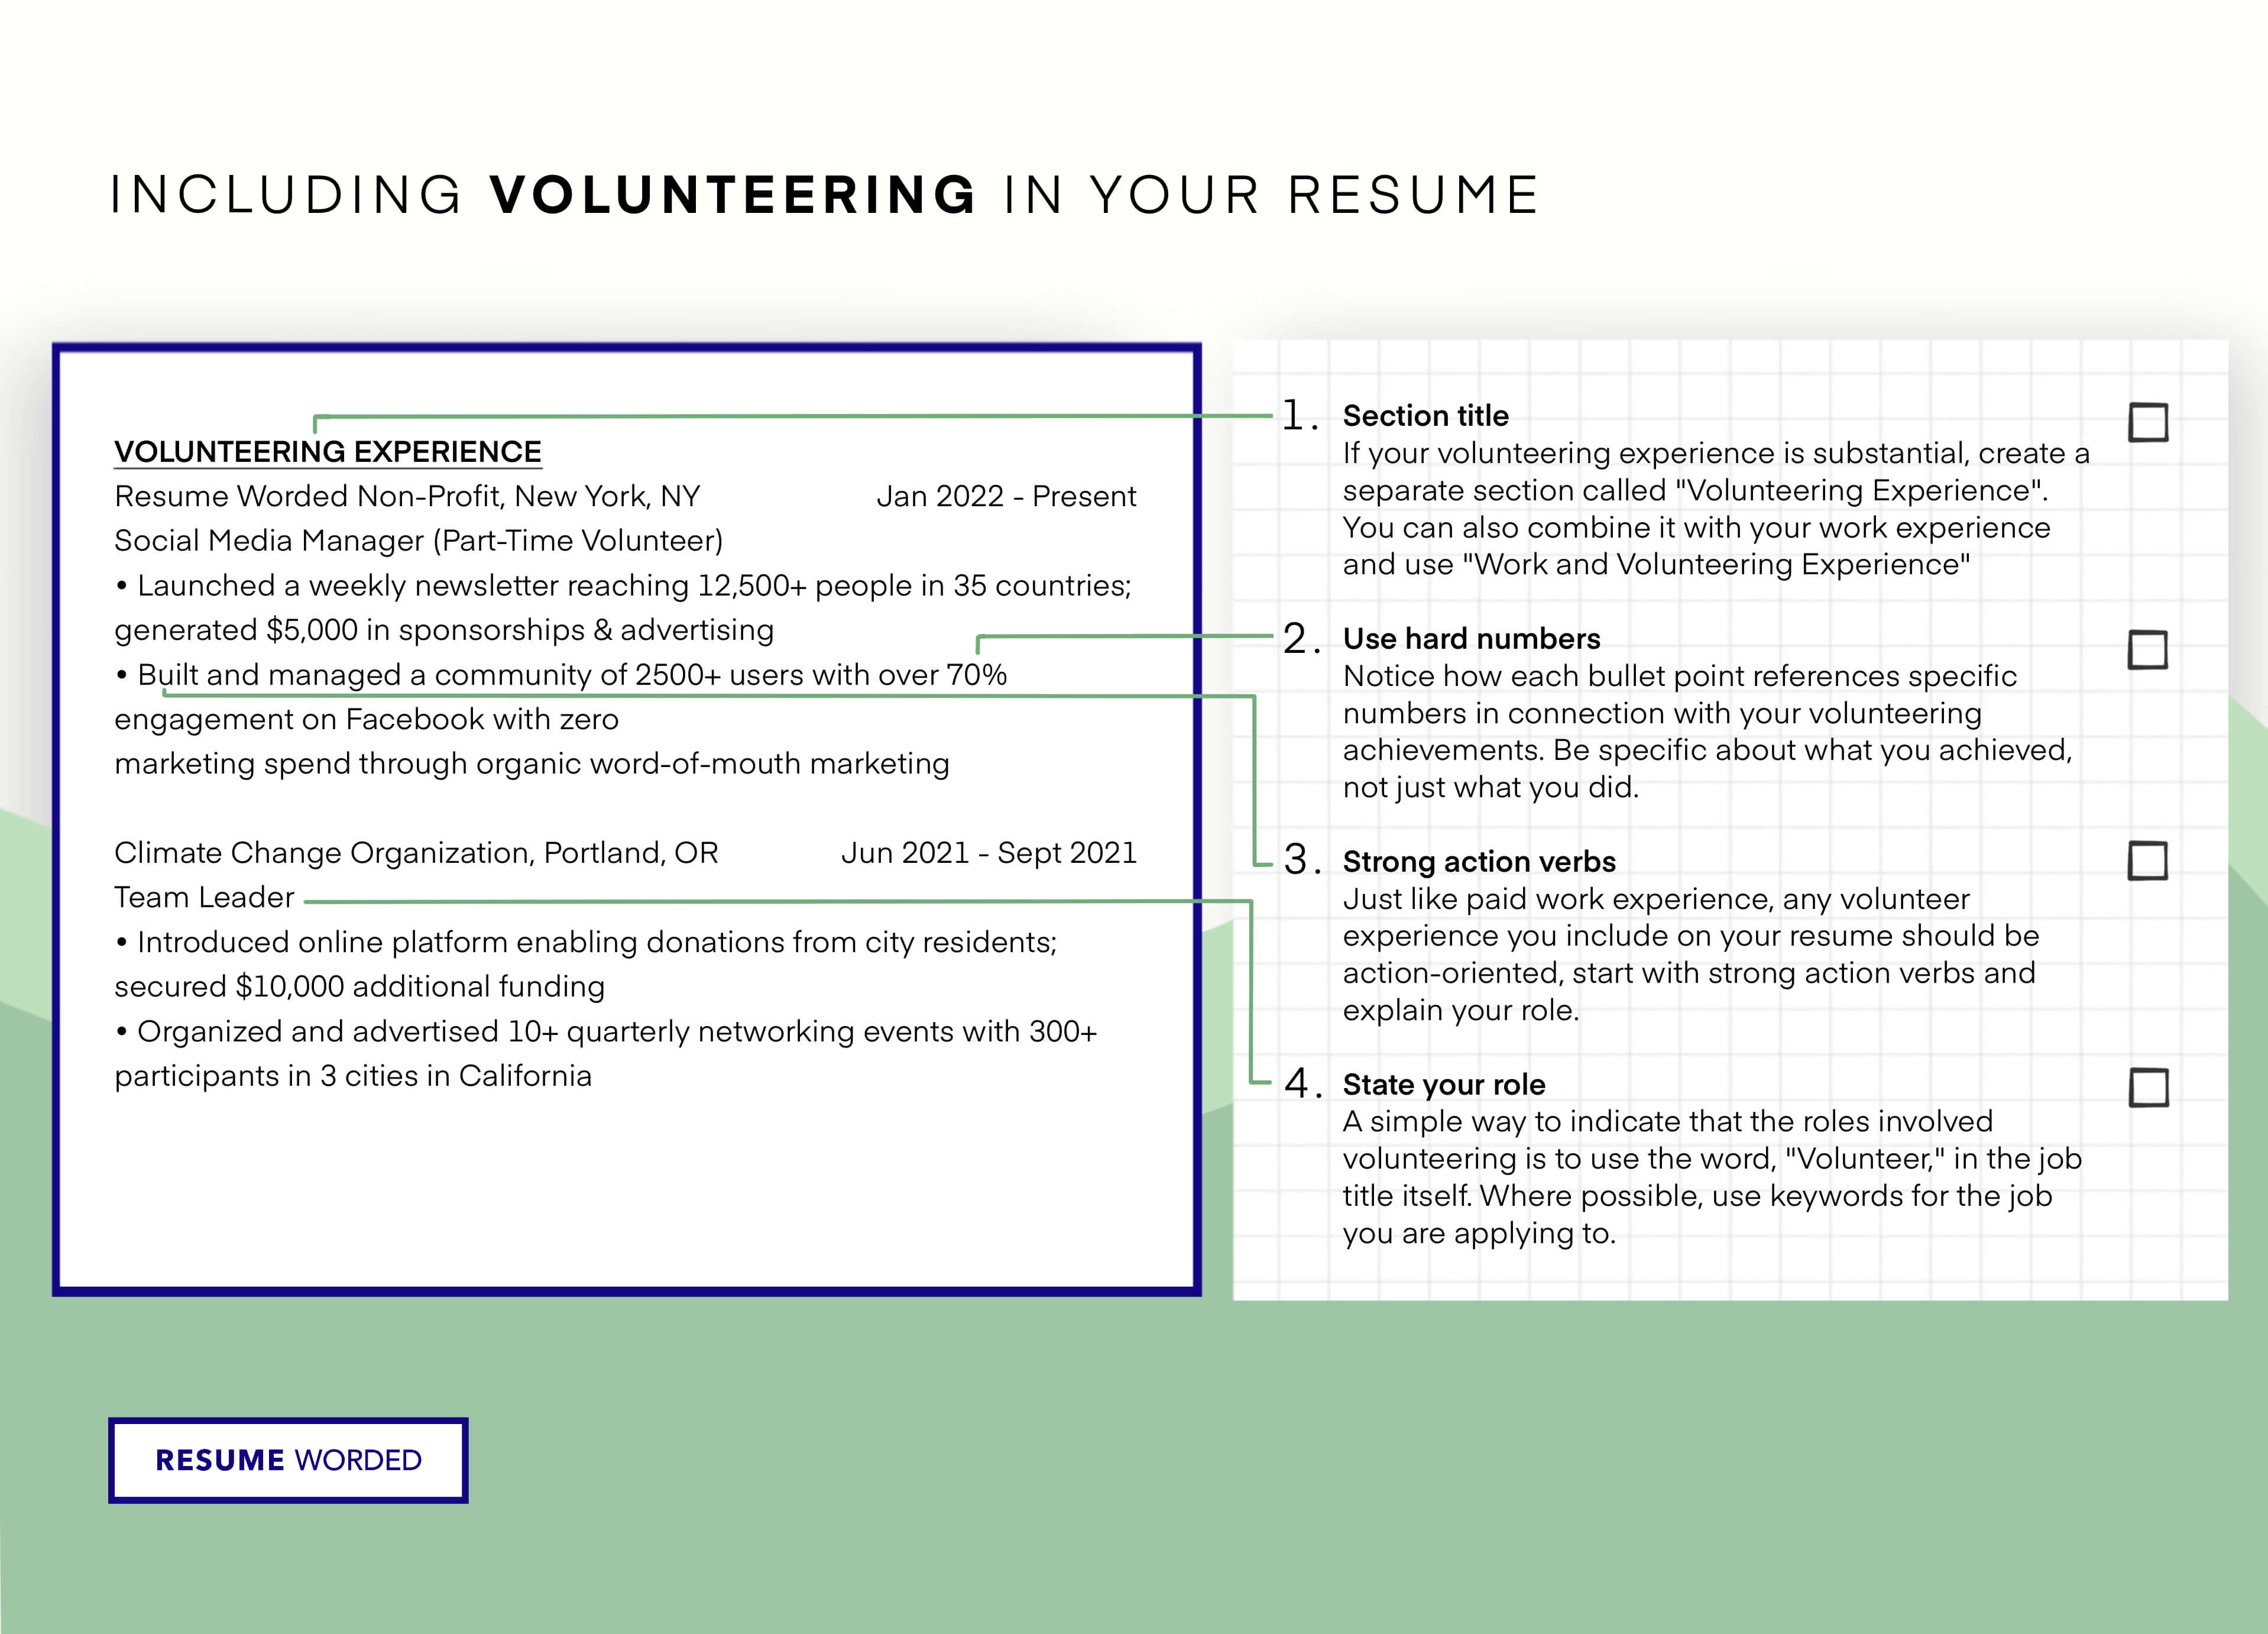 Lists volunteer experience in place of civil engineering work experience - Entry Level Civil Engineer Resume